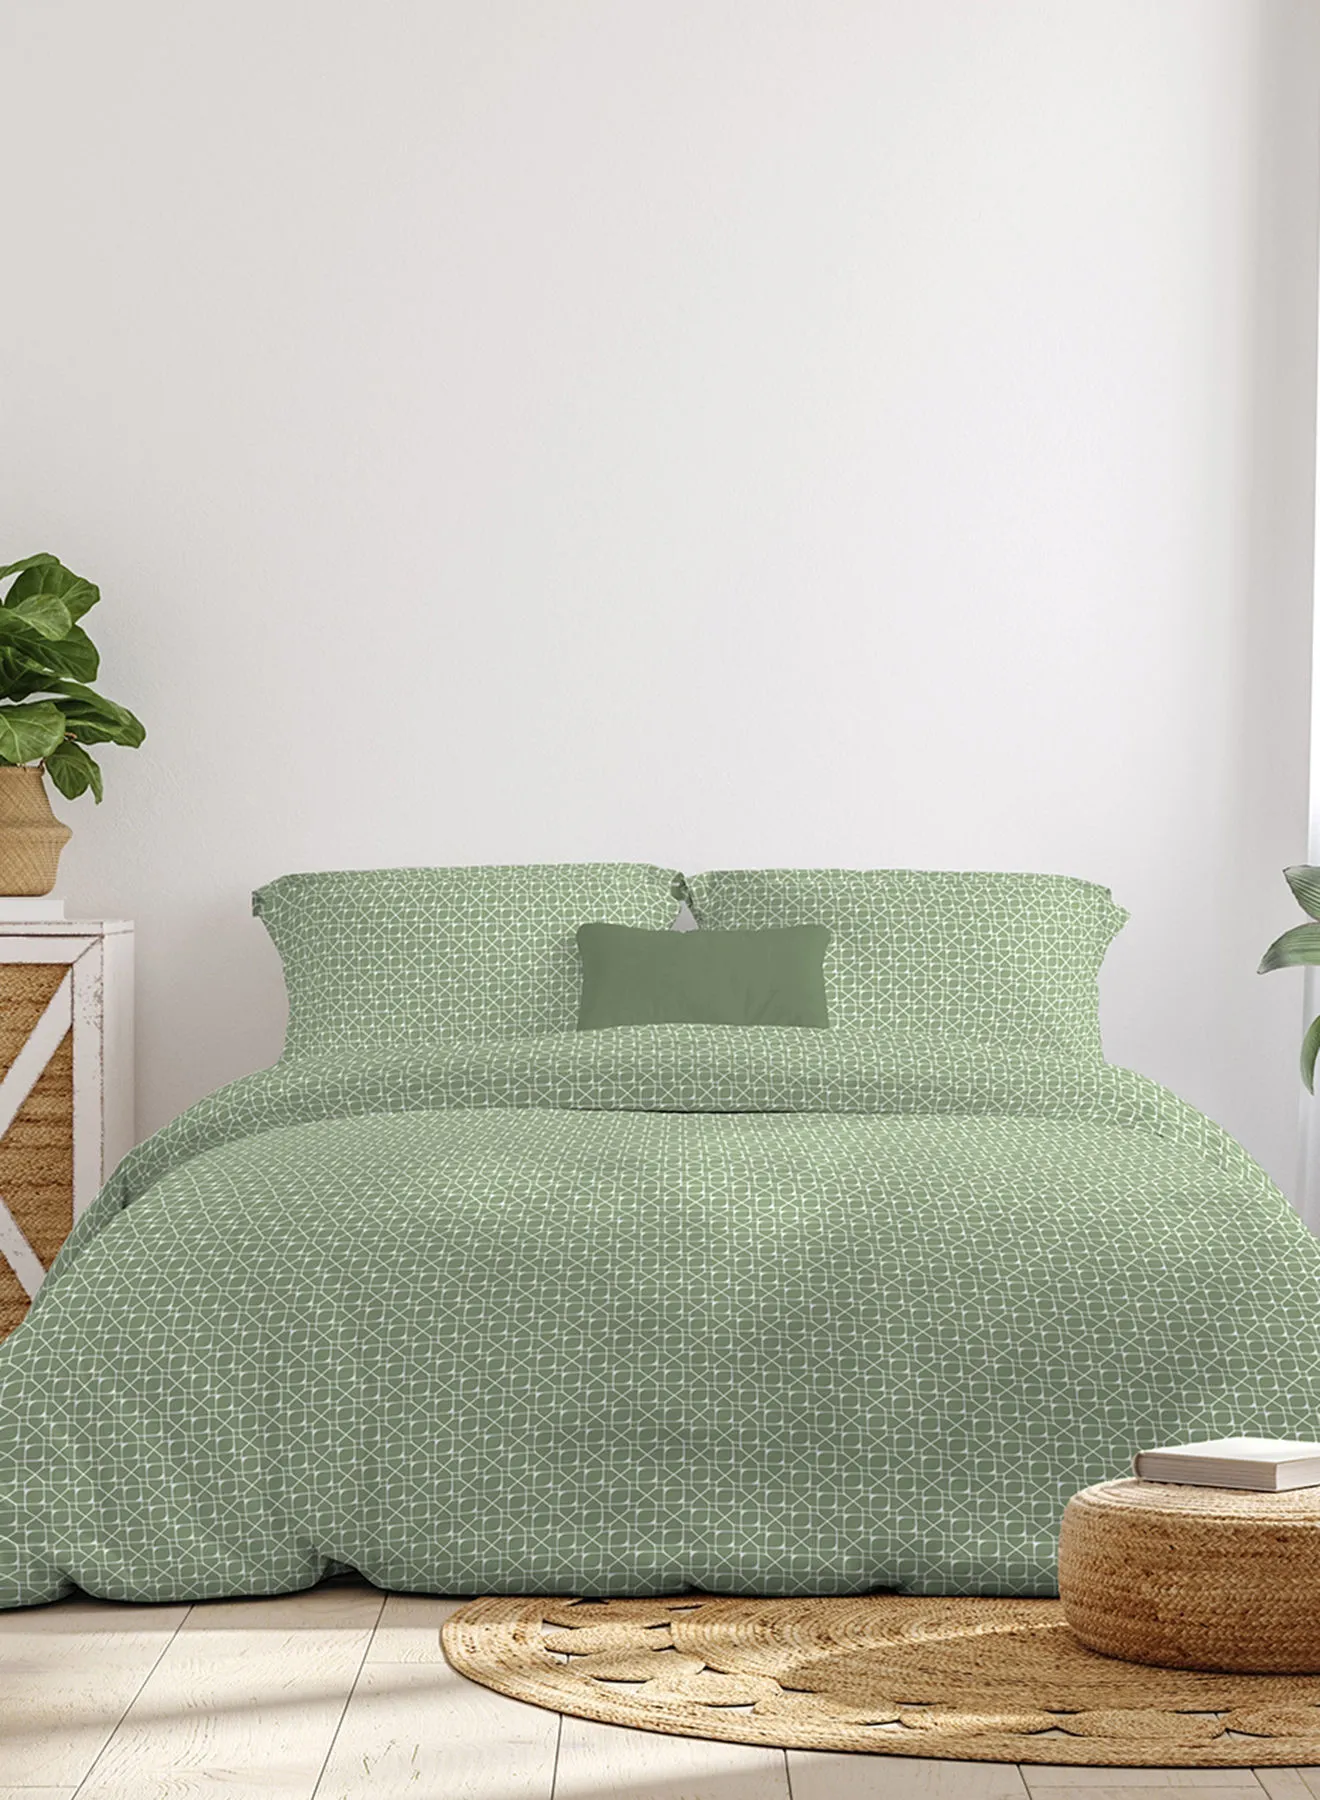 Amal Comforter Set Queen Size All Season Everyday Use Bedding Set 100% Cotton 3 Pieces 1 Comforter 2 Pillow Covers  Asparagus Green